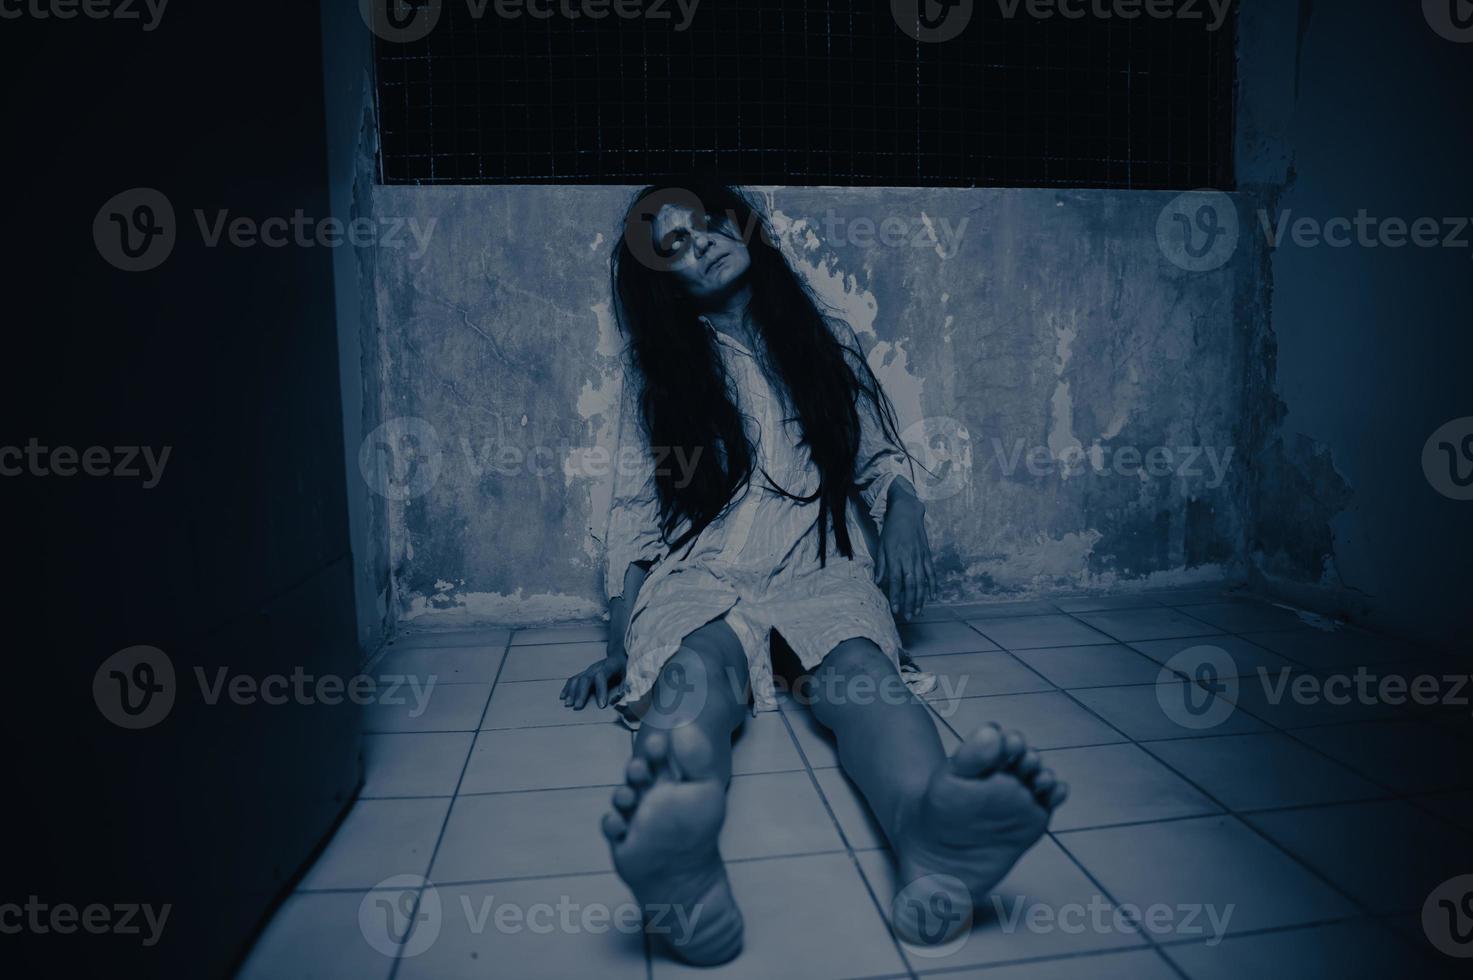 retrato de mulher asiática compõem fantasma, cena de terror assustadora para fundo, conceito de festival de halloween, cartaz de filmes de fantasmas, espírito raivoso no apartamento foto